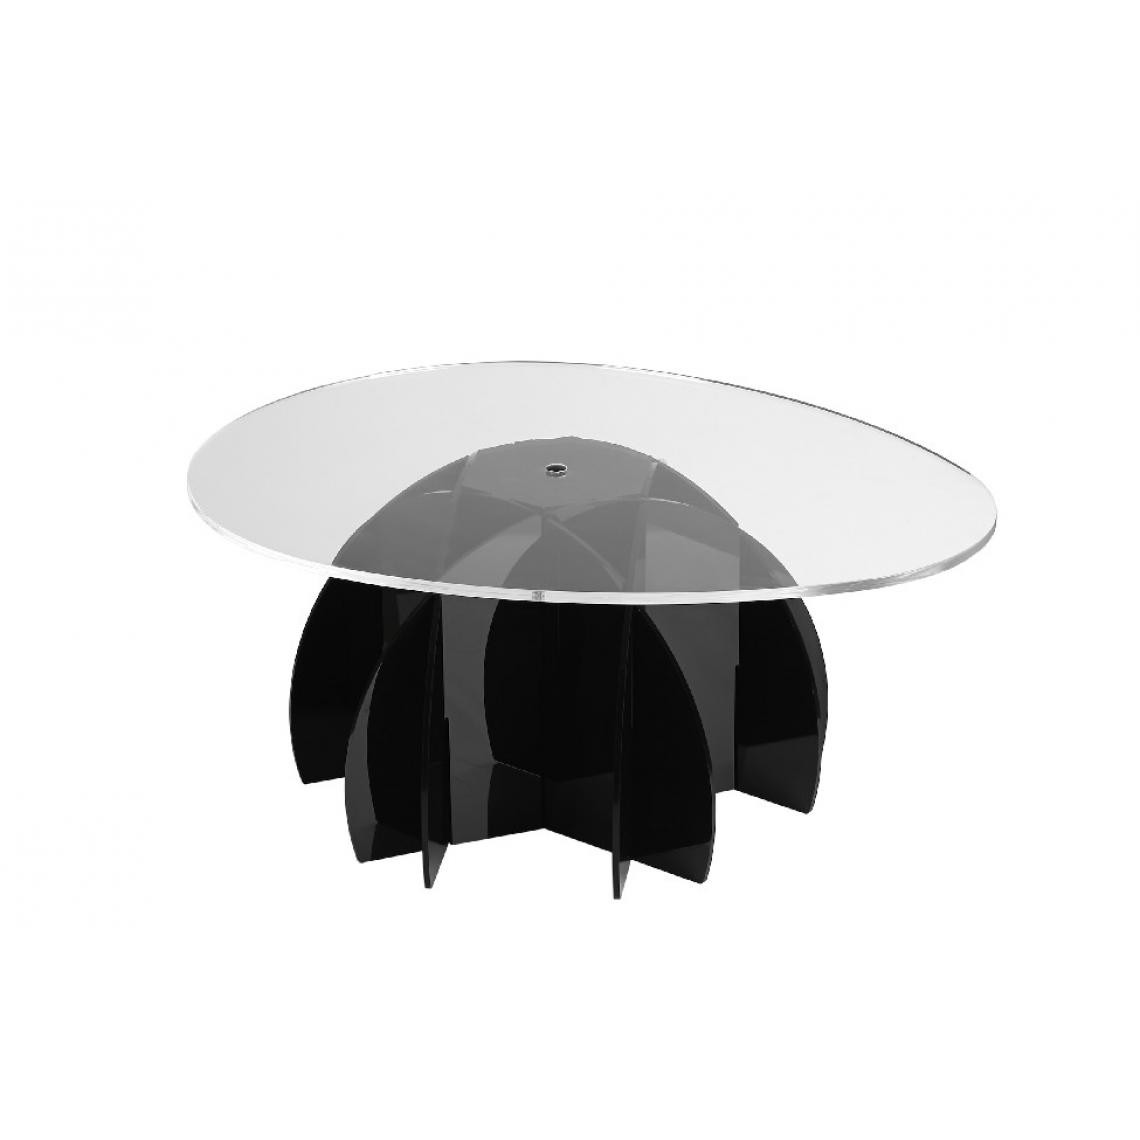 Homemania - HOMEMANIA Table basse Atlante - Noir, Transparent - 77 x 60 x 33 cm - Tables basses